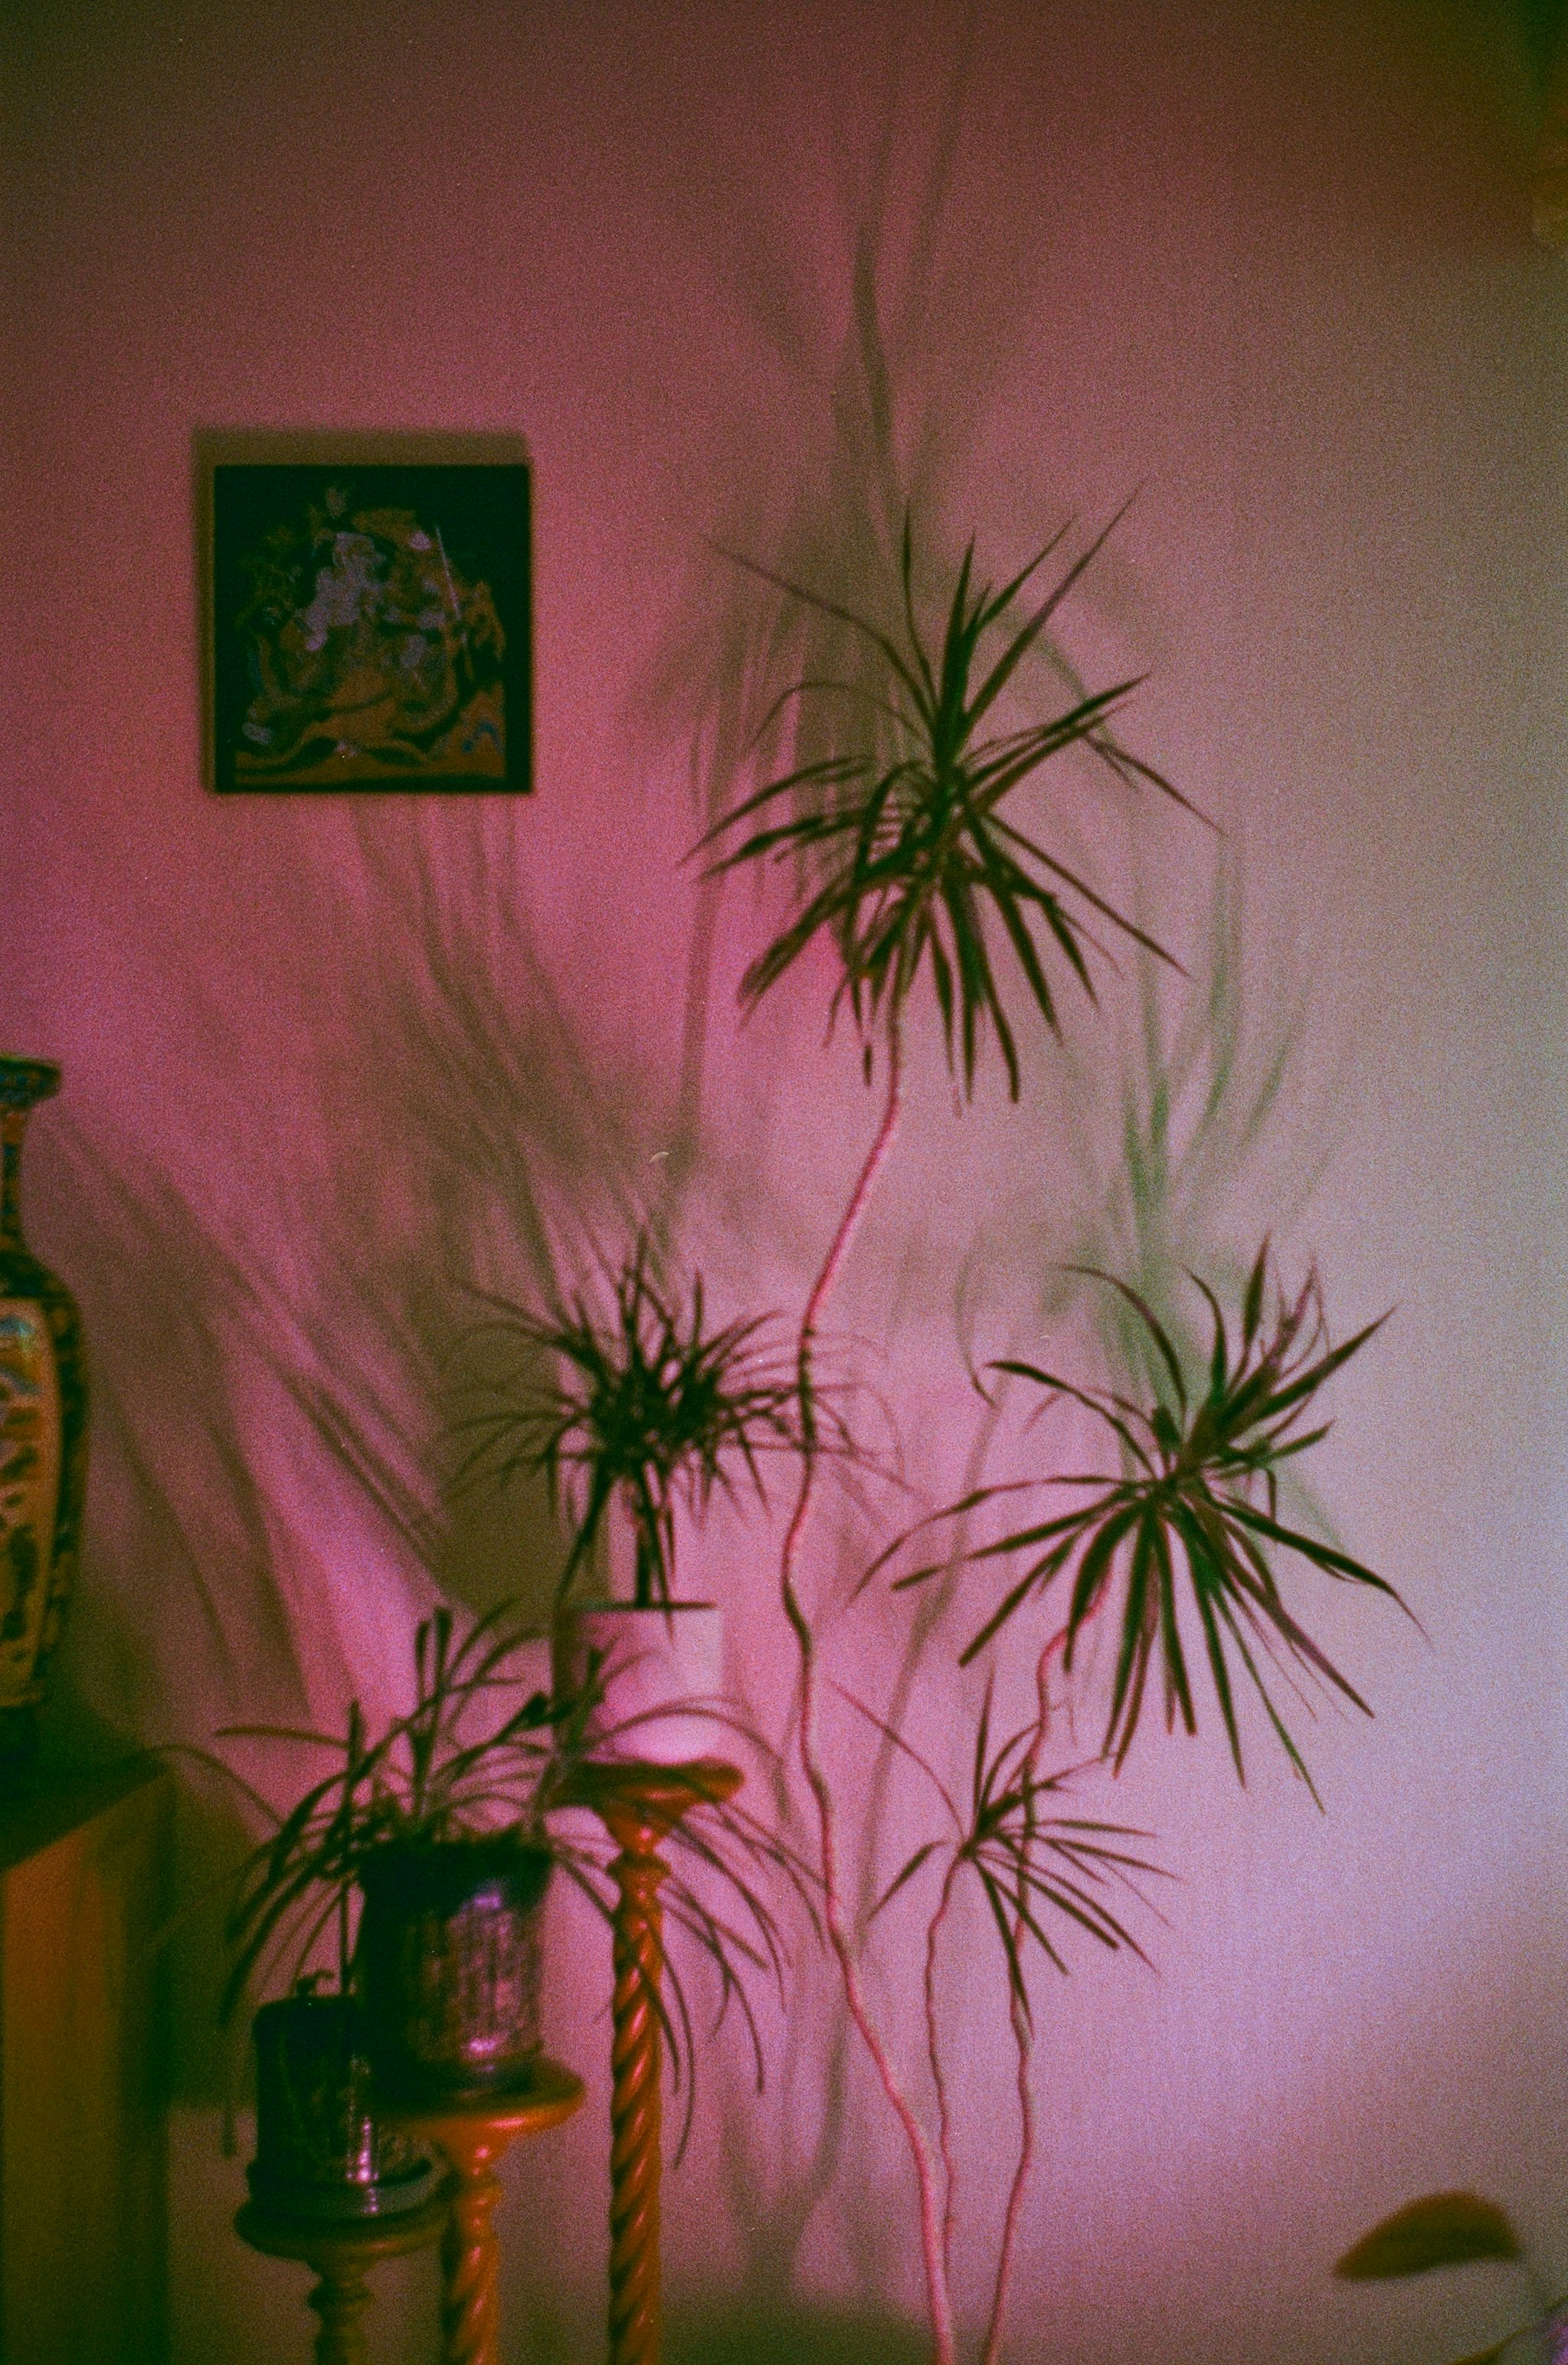 green palm plant near white wall